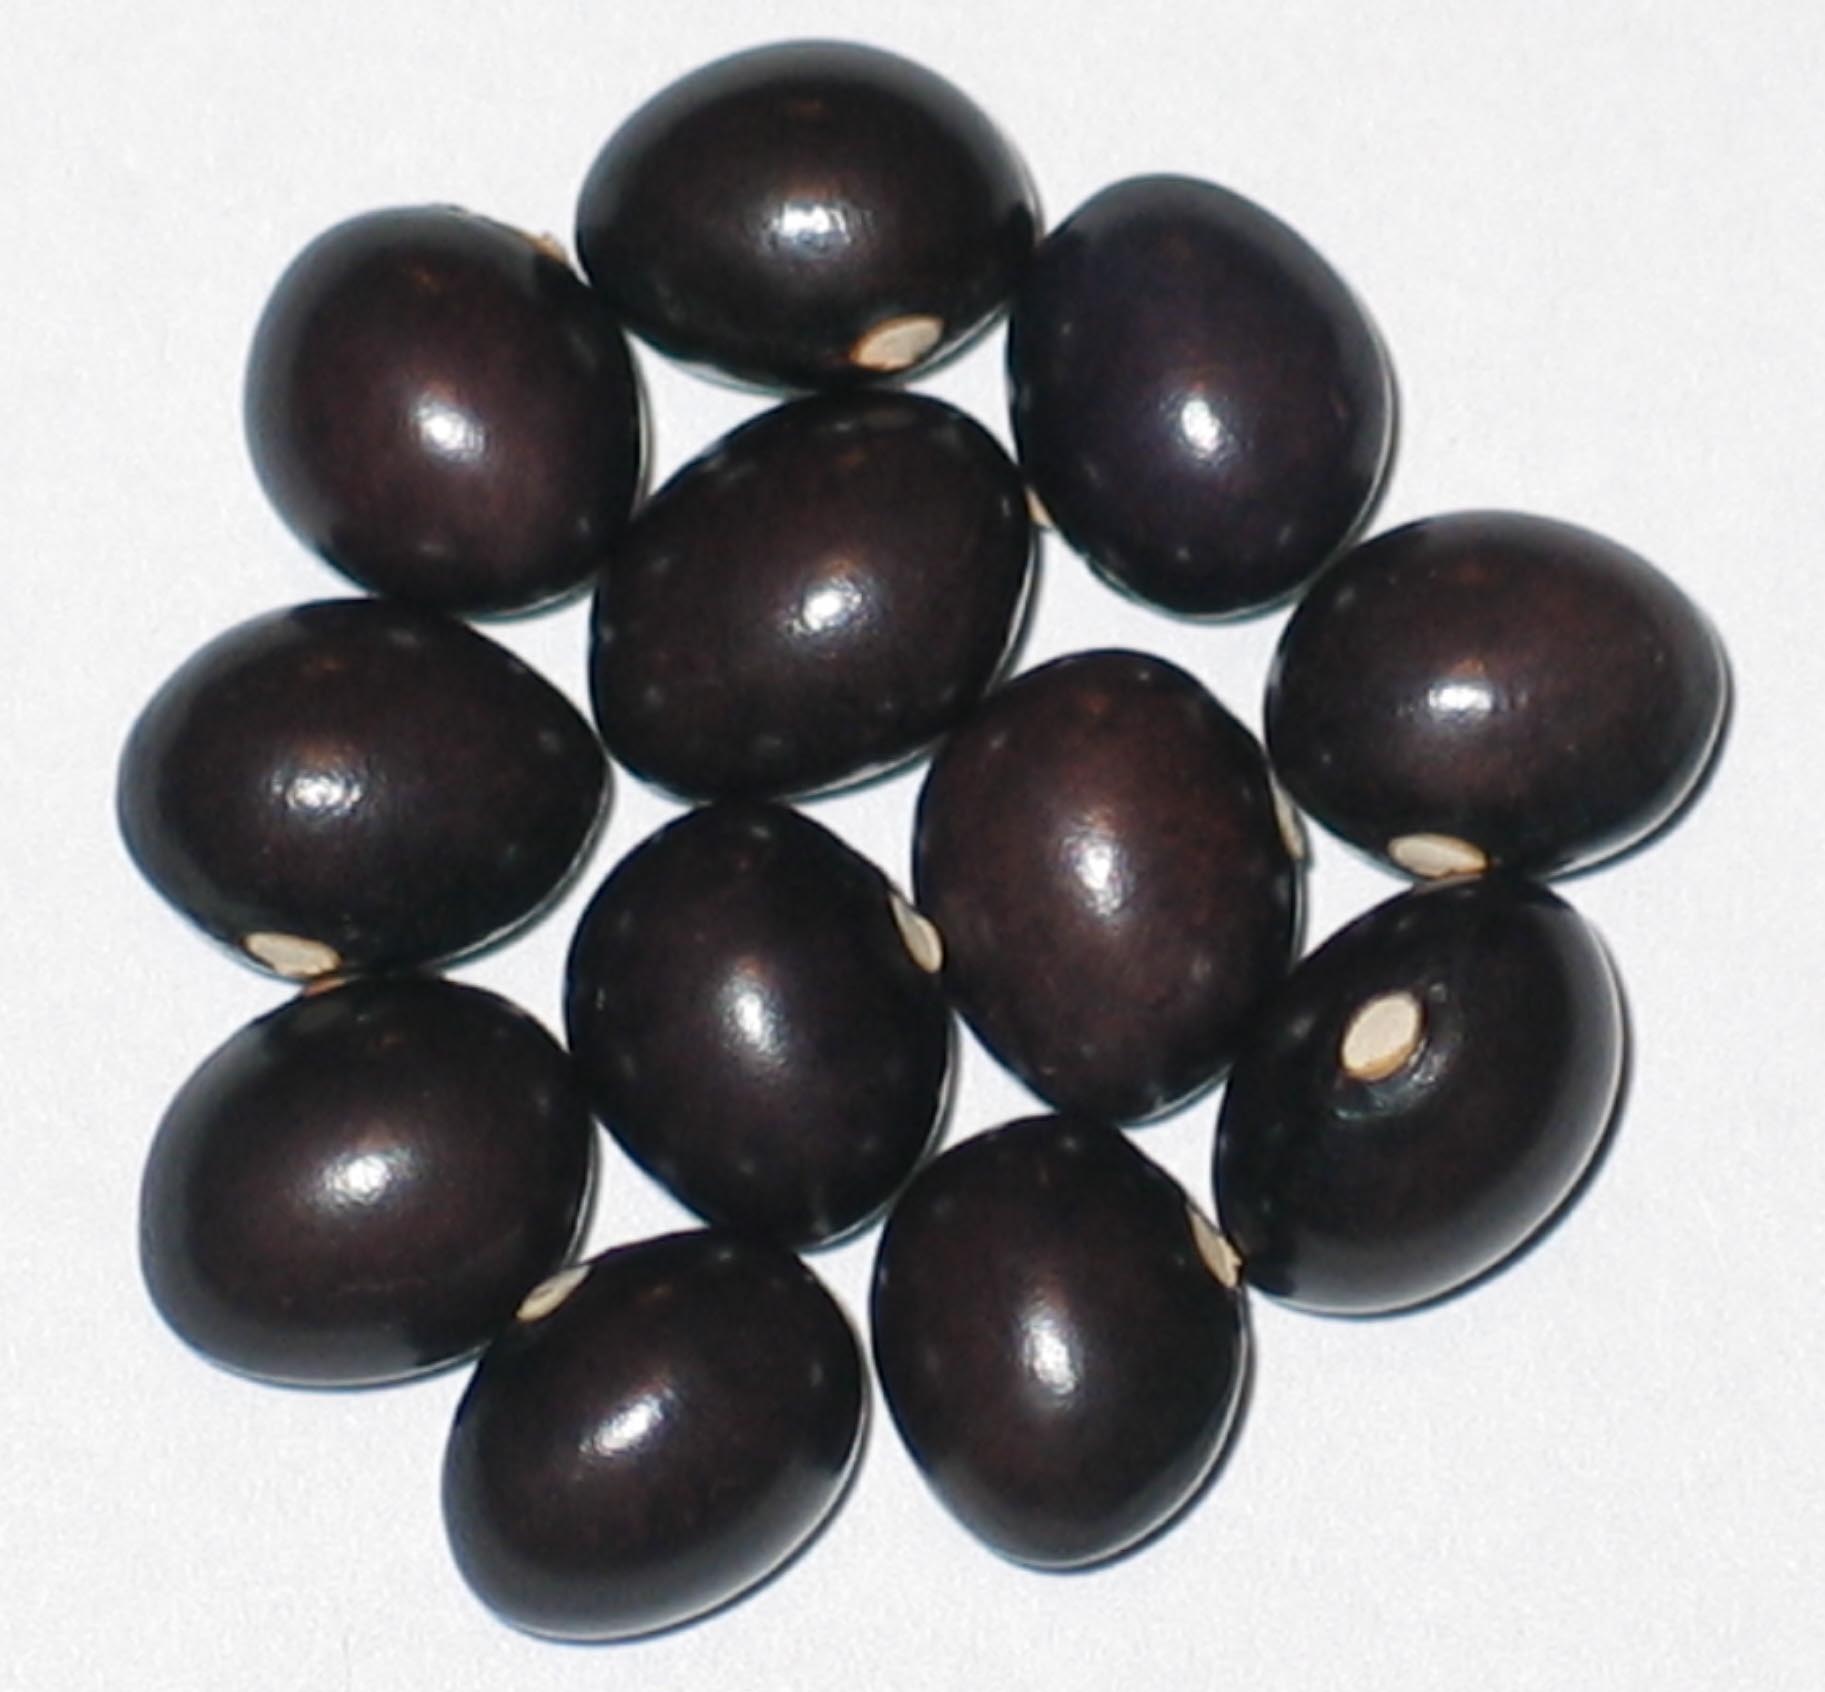 image of Poletschka beans